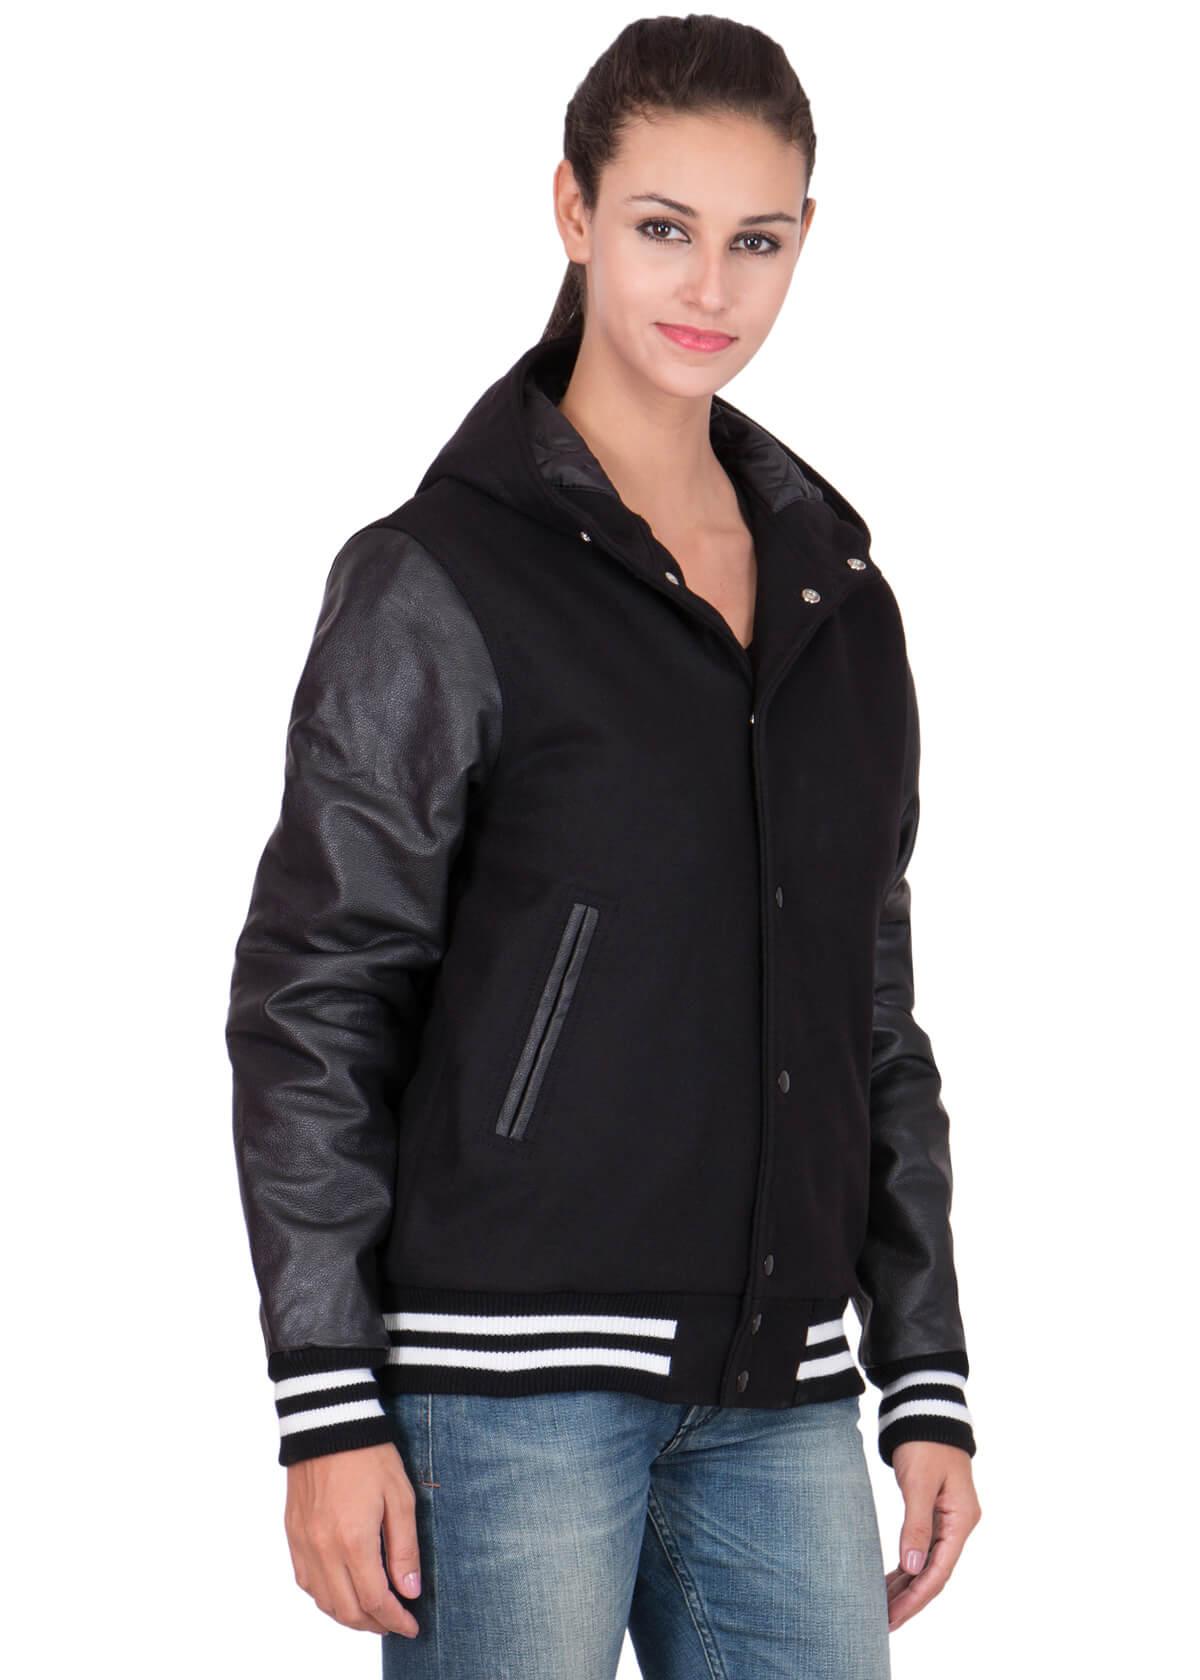 Womens Black Hood Varsity Jacket With Leather Sleeves-3